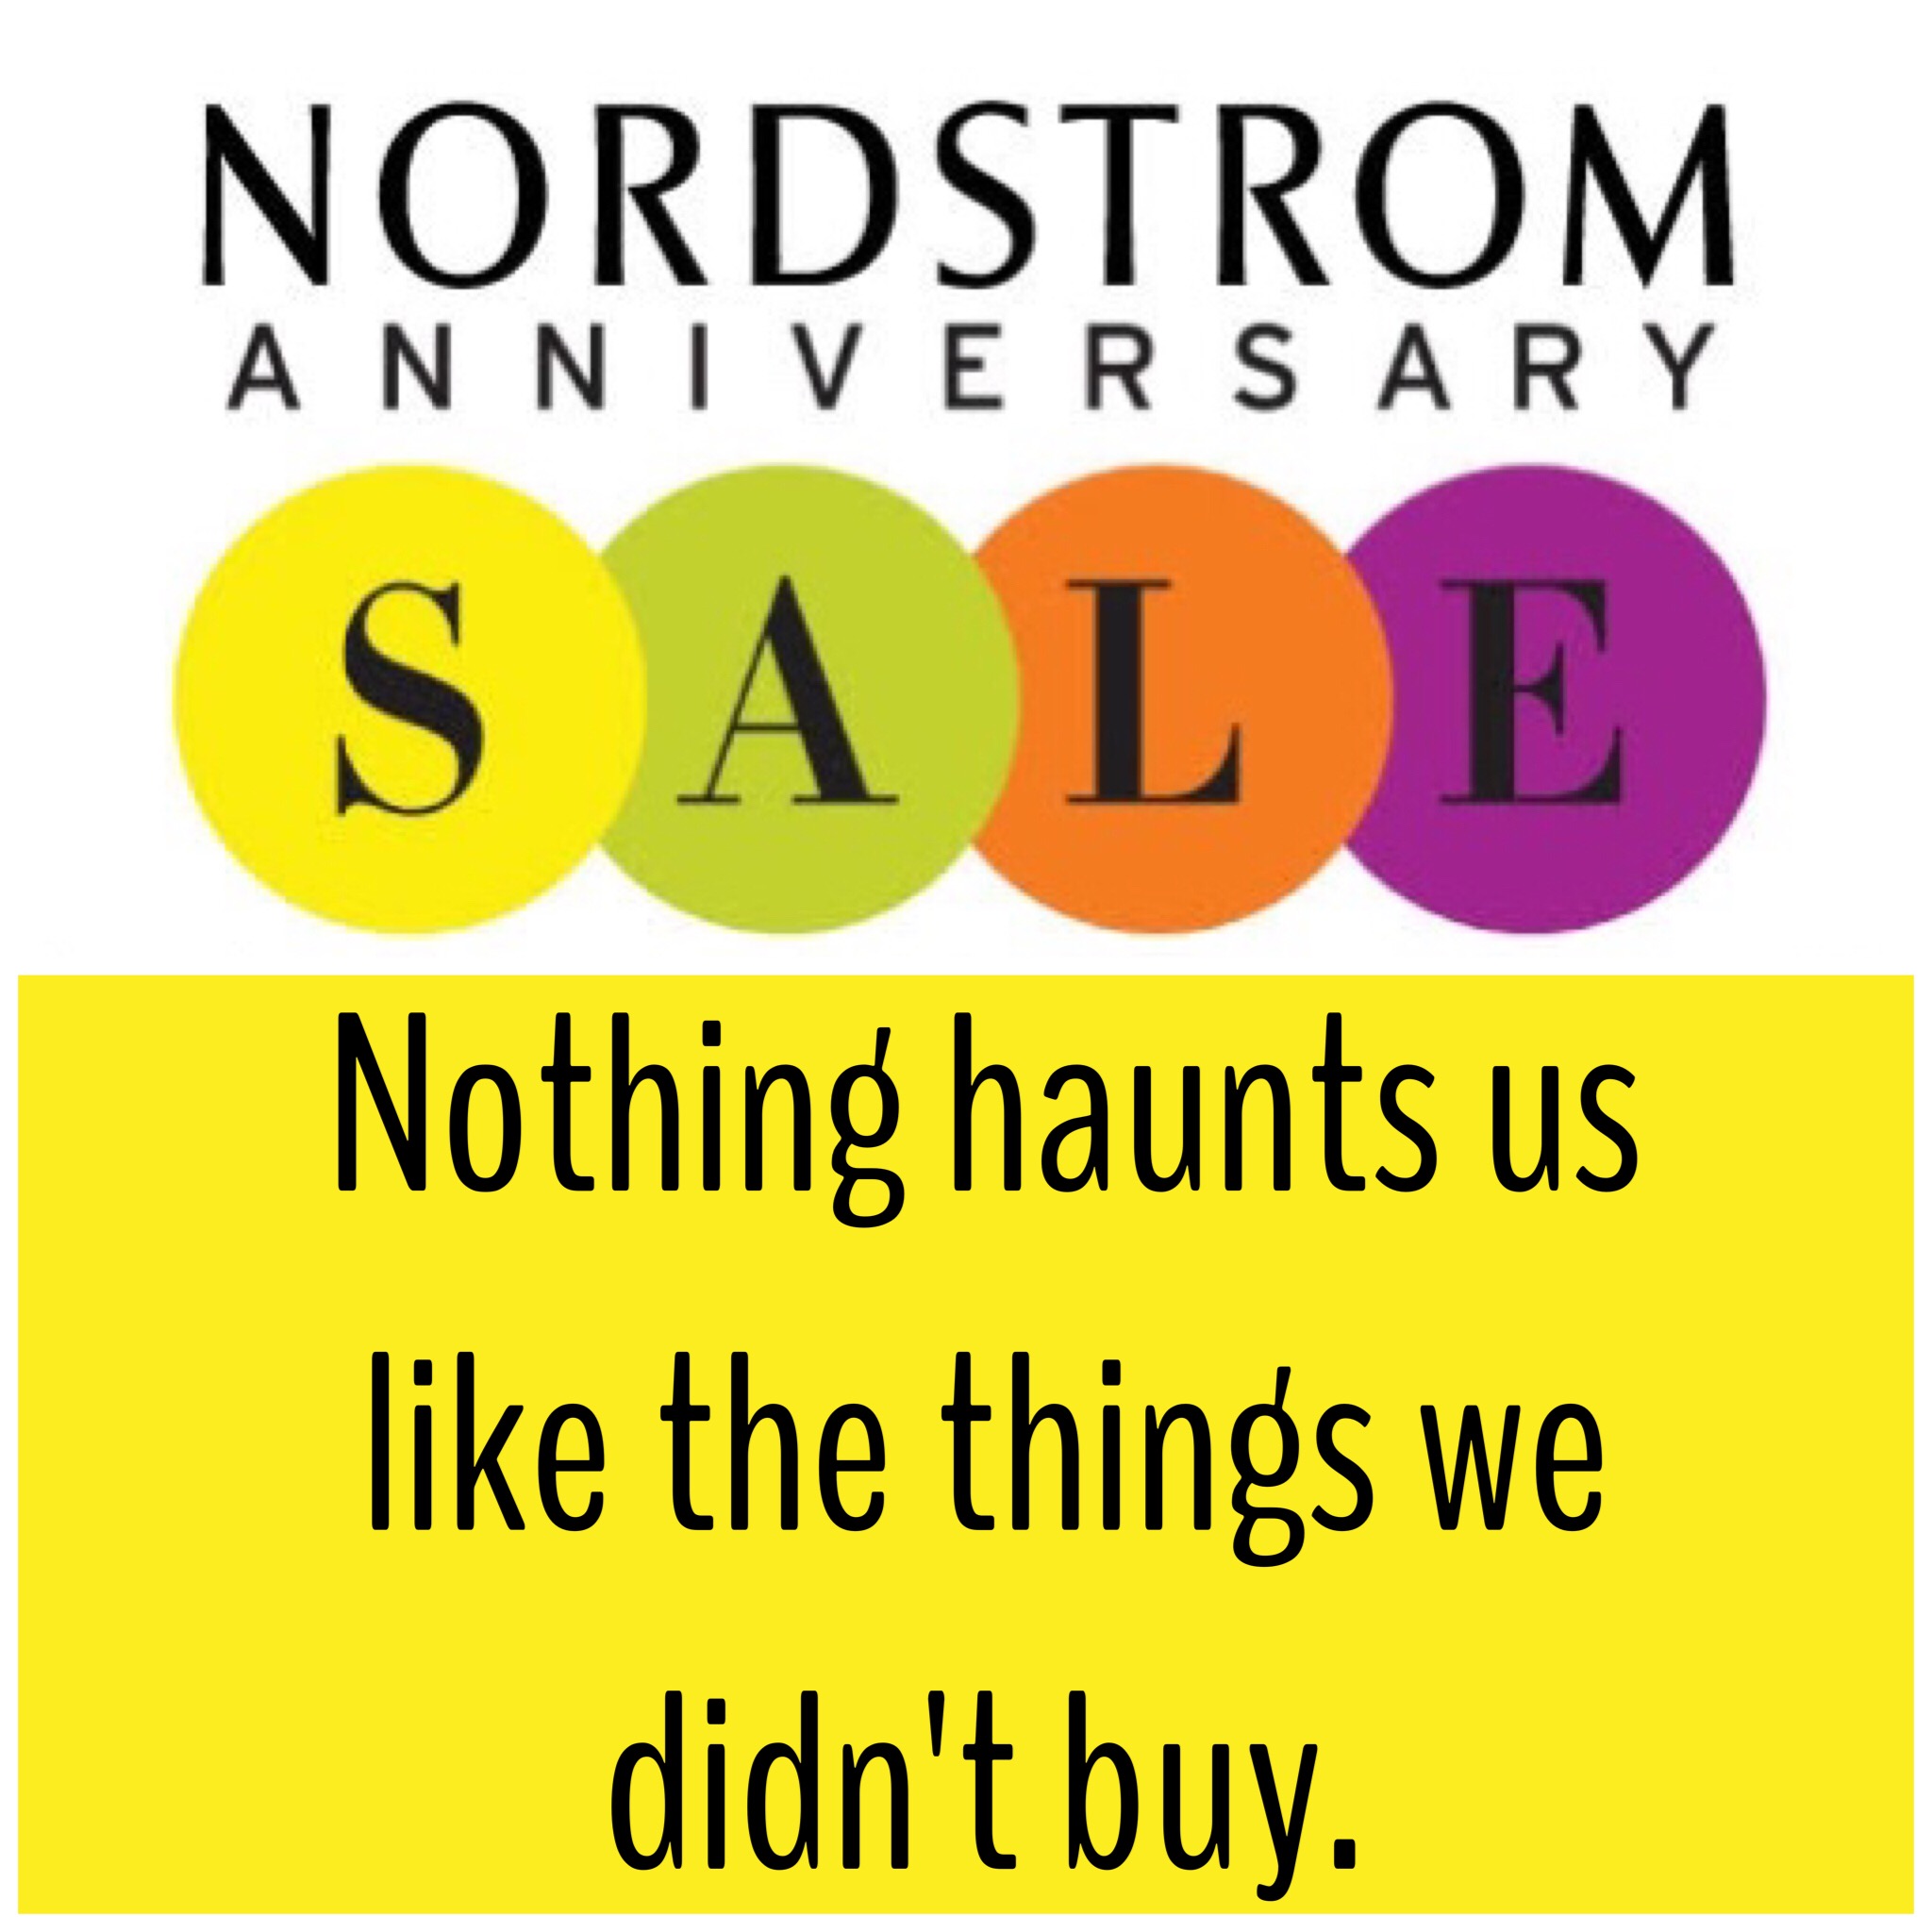 10 Nordstrom Anniversary Deals You Shouldn’t Miss